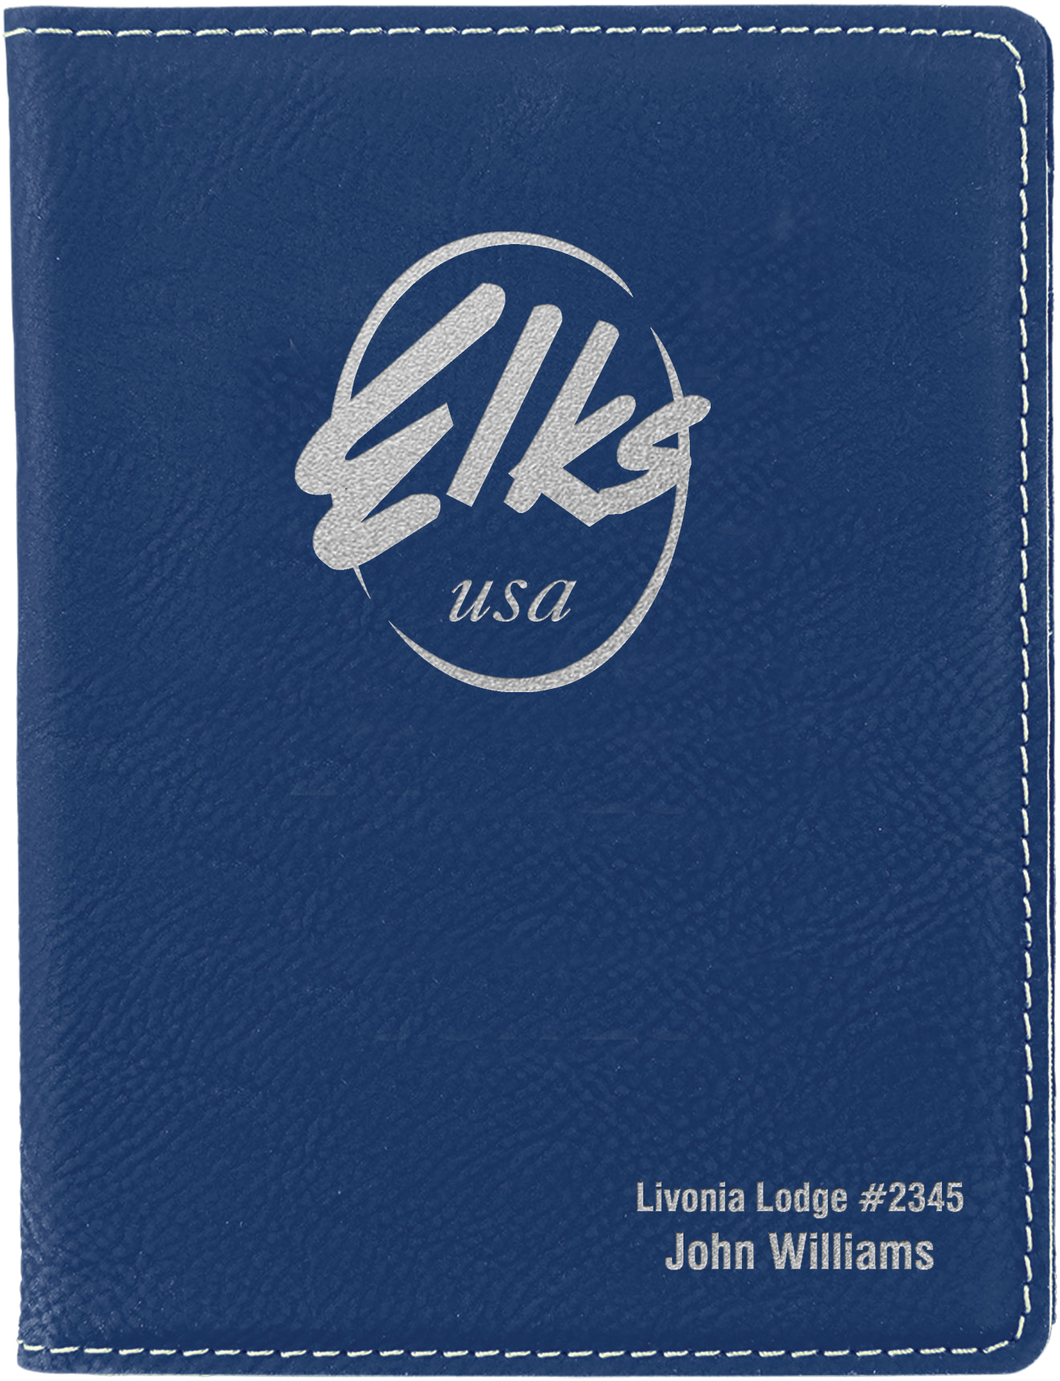 Leatherette Passport Cover